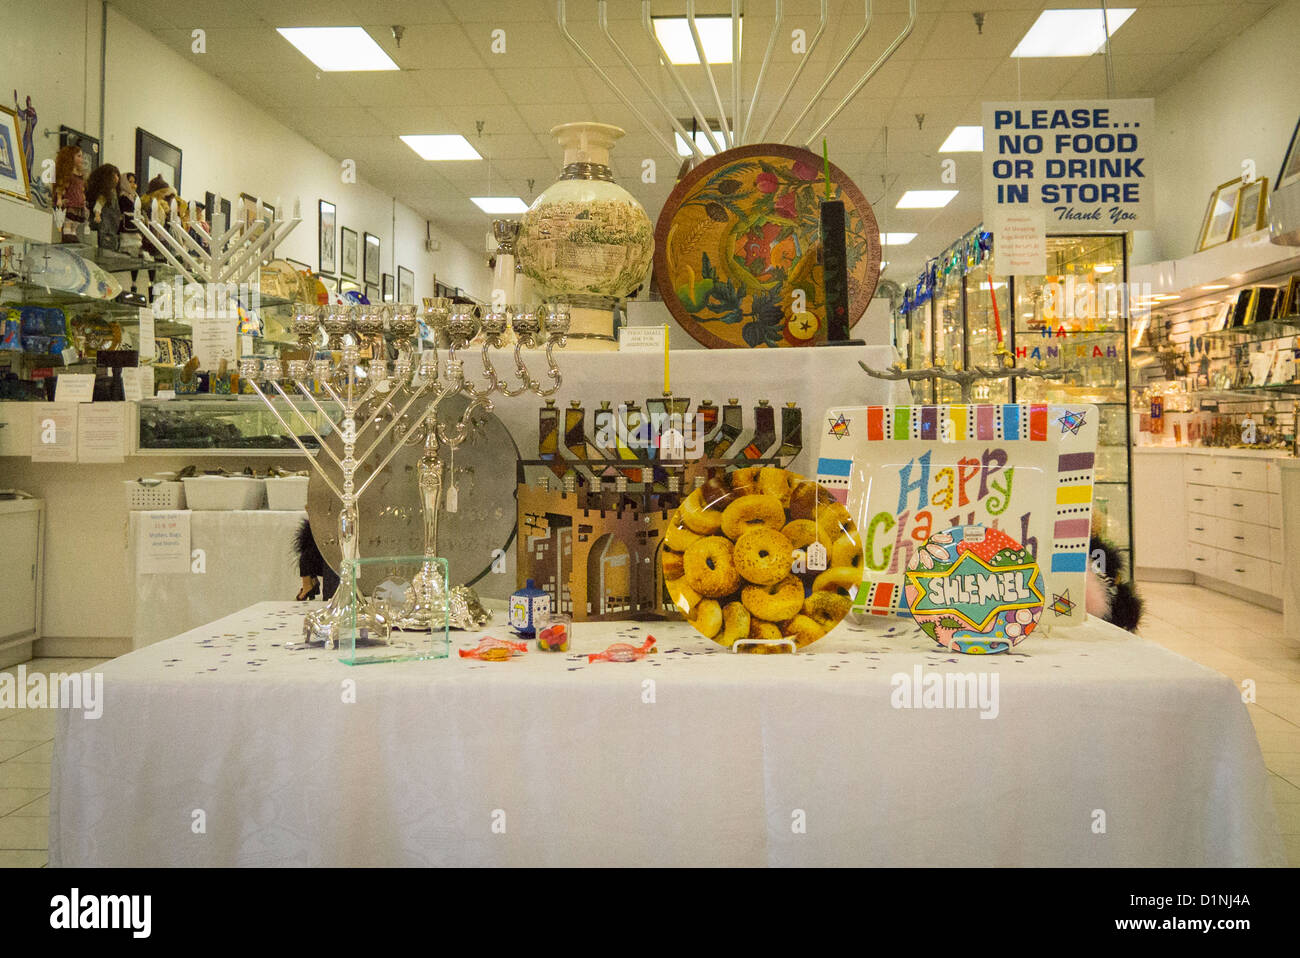 USA Florida Boca Raton Festival Mercato delle Pulci Mall tradizioni ebraica Judaica merci store shop display menorah hanukkiya etc Foto Stock